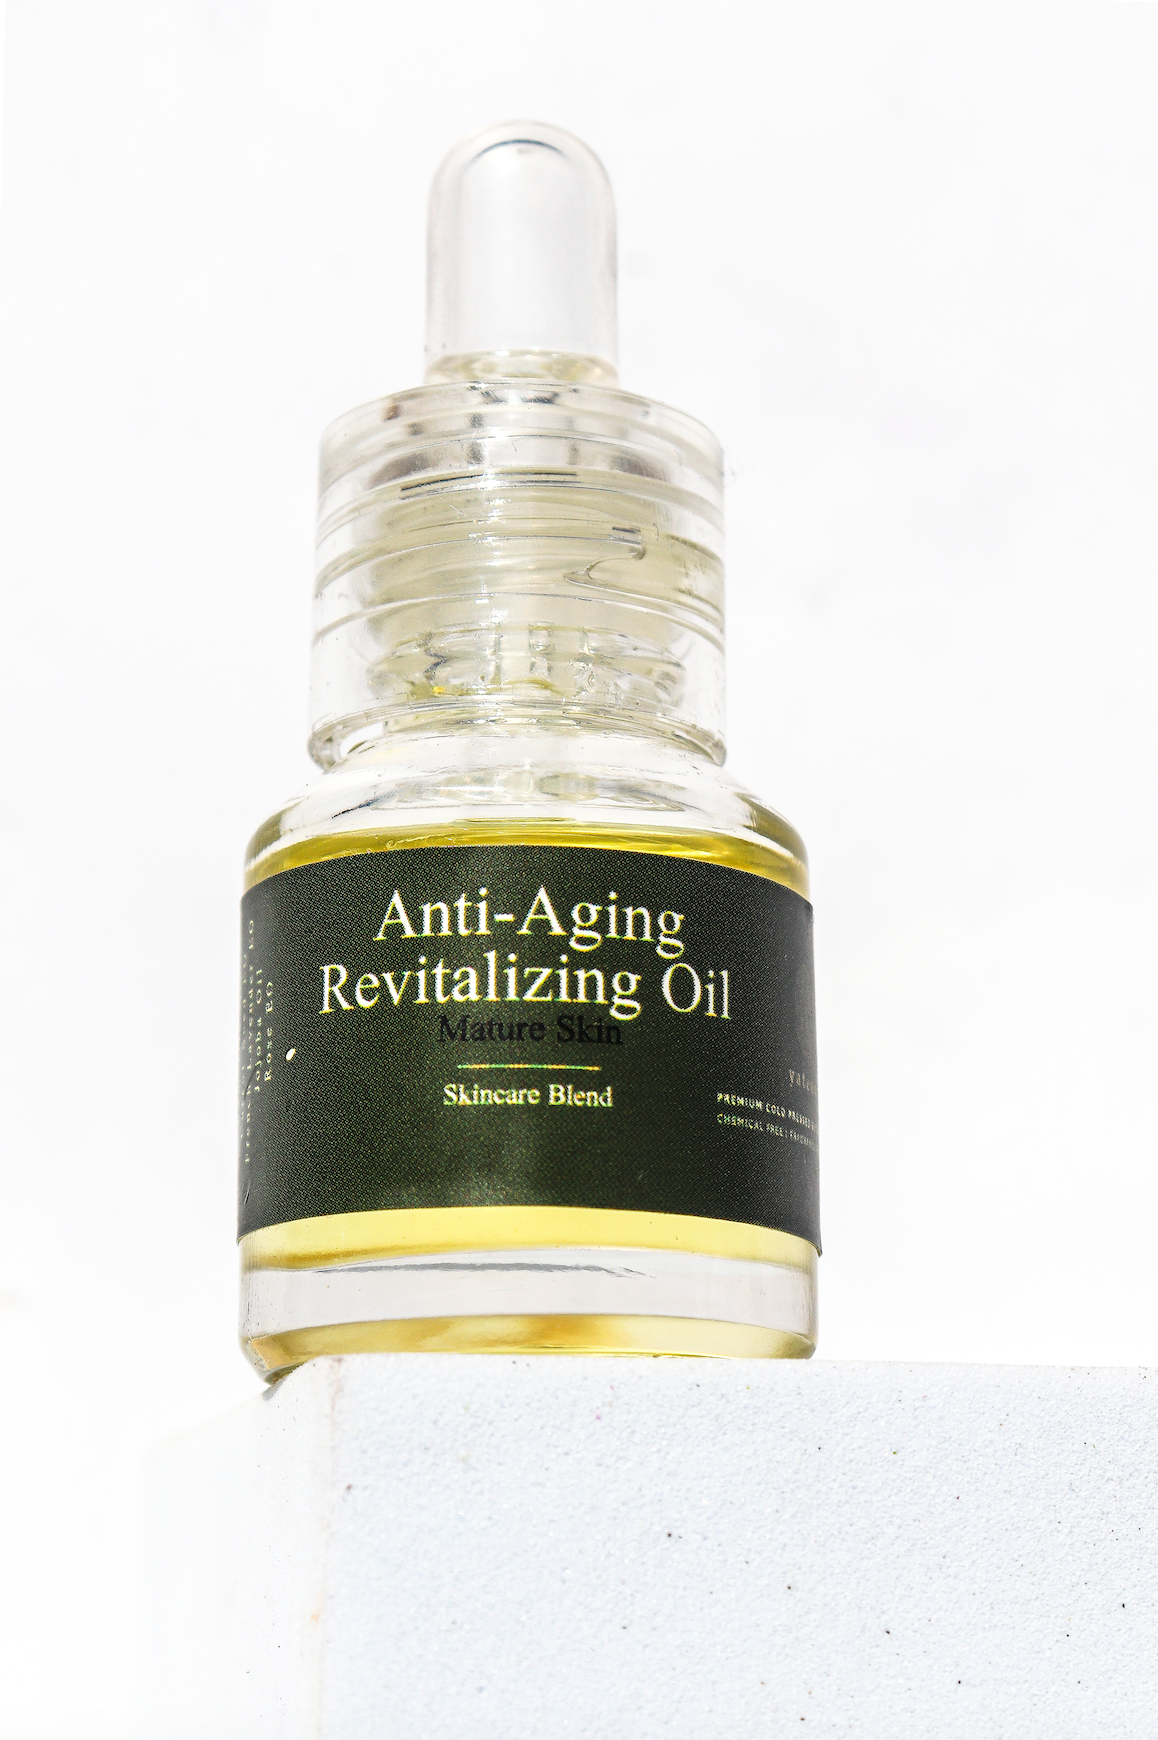 Anti-Aging Revitalizing Oil